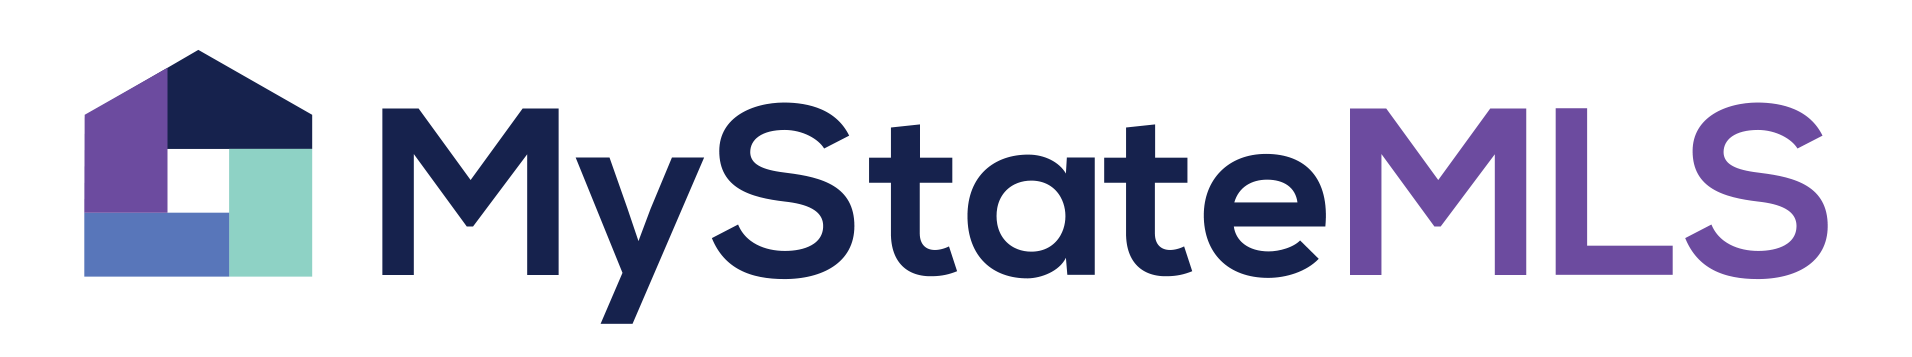 MyStateMLS logo